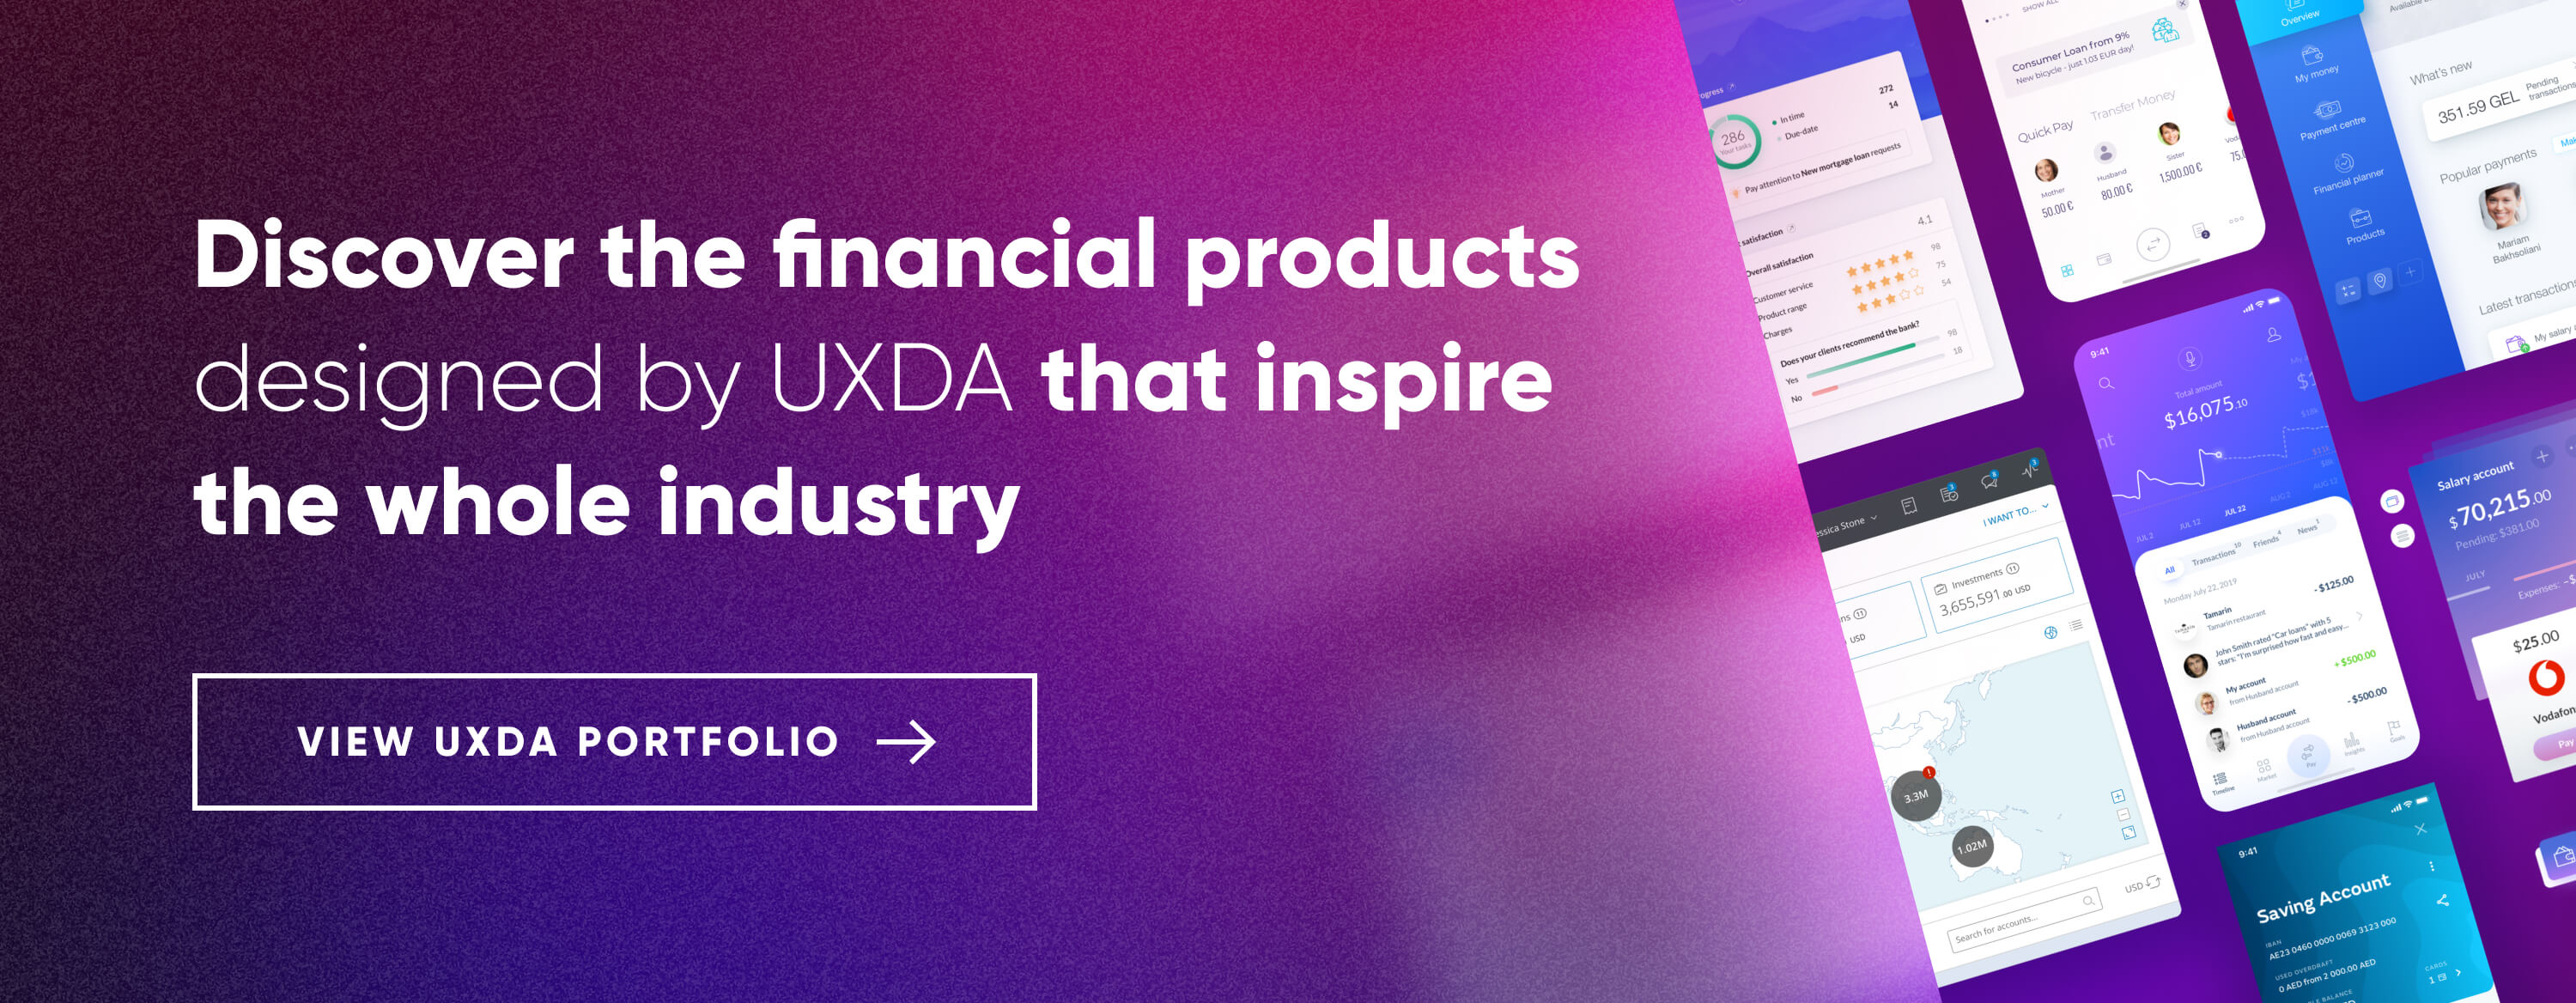 uxda-portfolio-financial-digital-product-inspire-industry-ux-1667397545.jpg